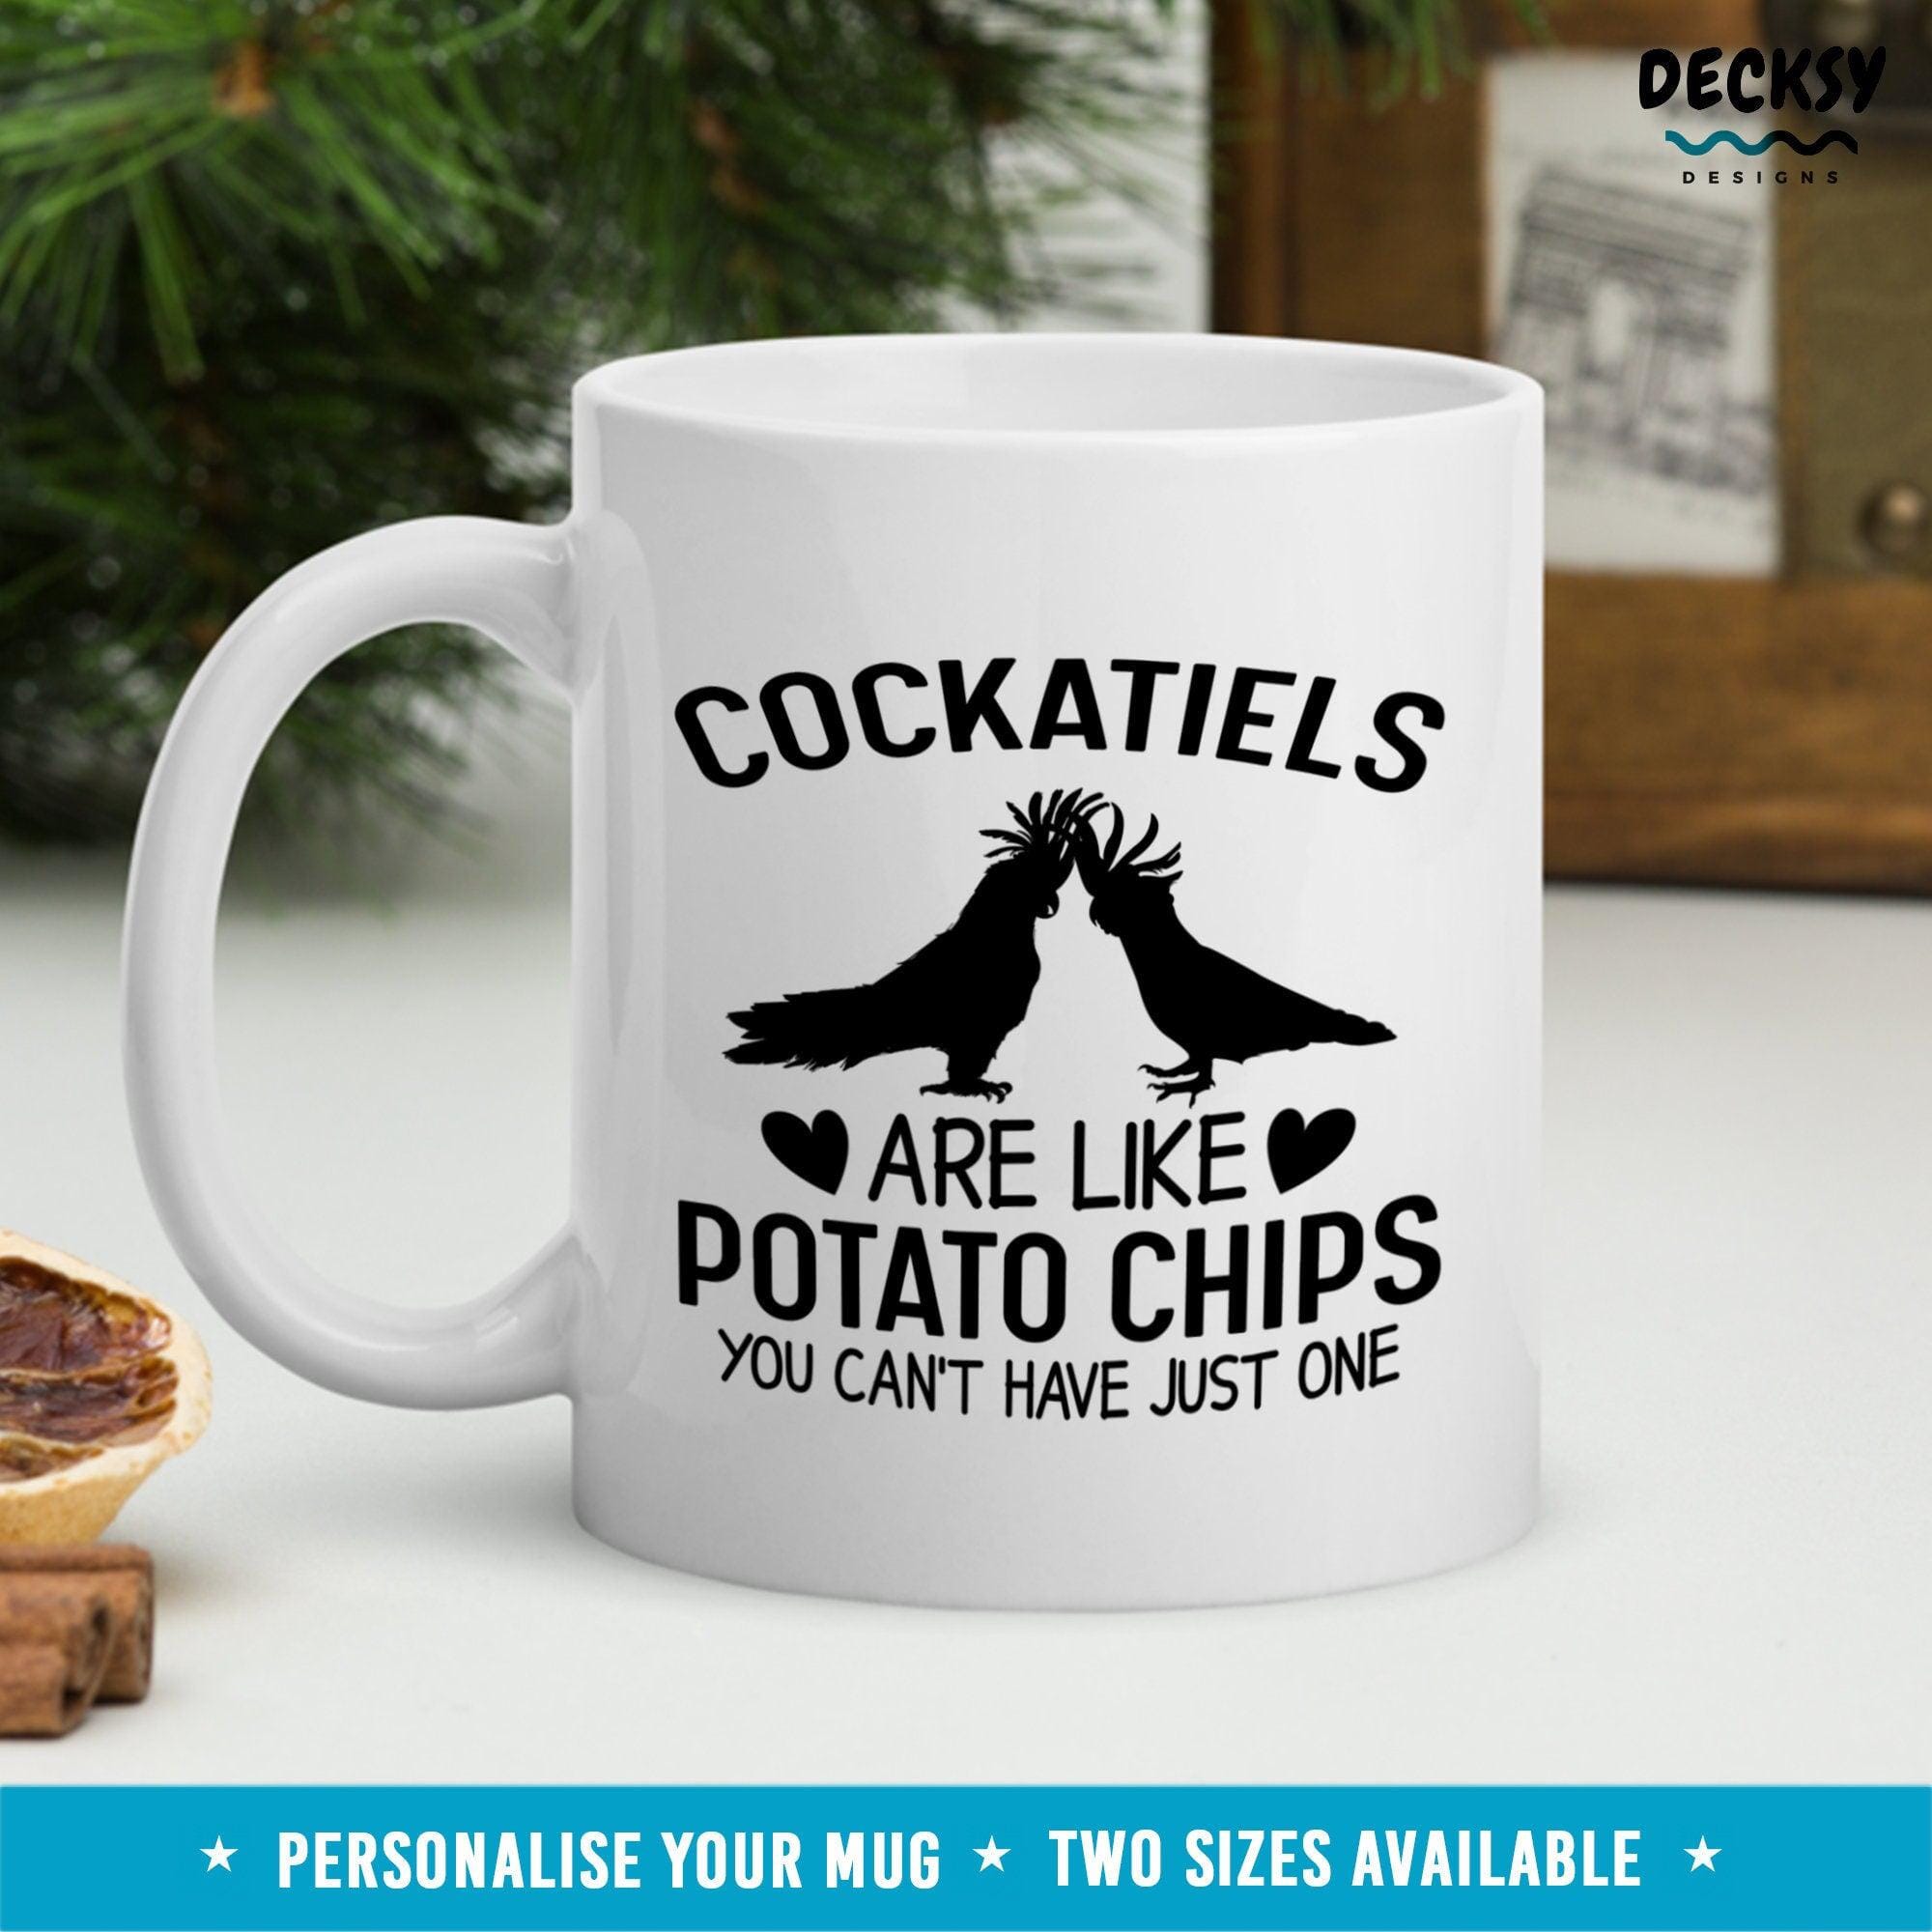 Cockatiel Coffee Mug, Personalised Bird Lover Gift-Home & Living:Kitchen & Dining:Drink & Barware:Drinkware:Mugs-DecksyDesigns-11 Oz-NO PERSONALISATION-DecksyDesigns